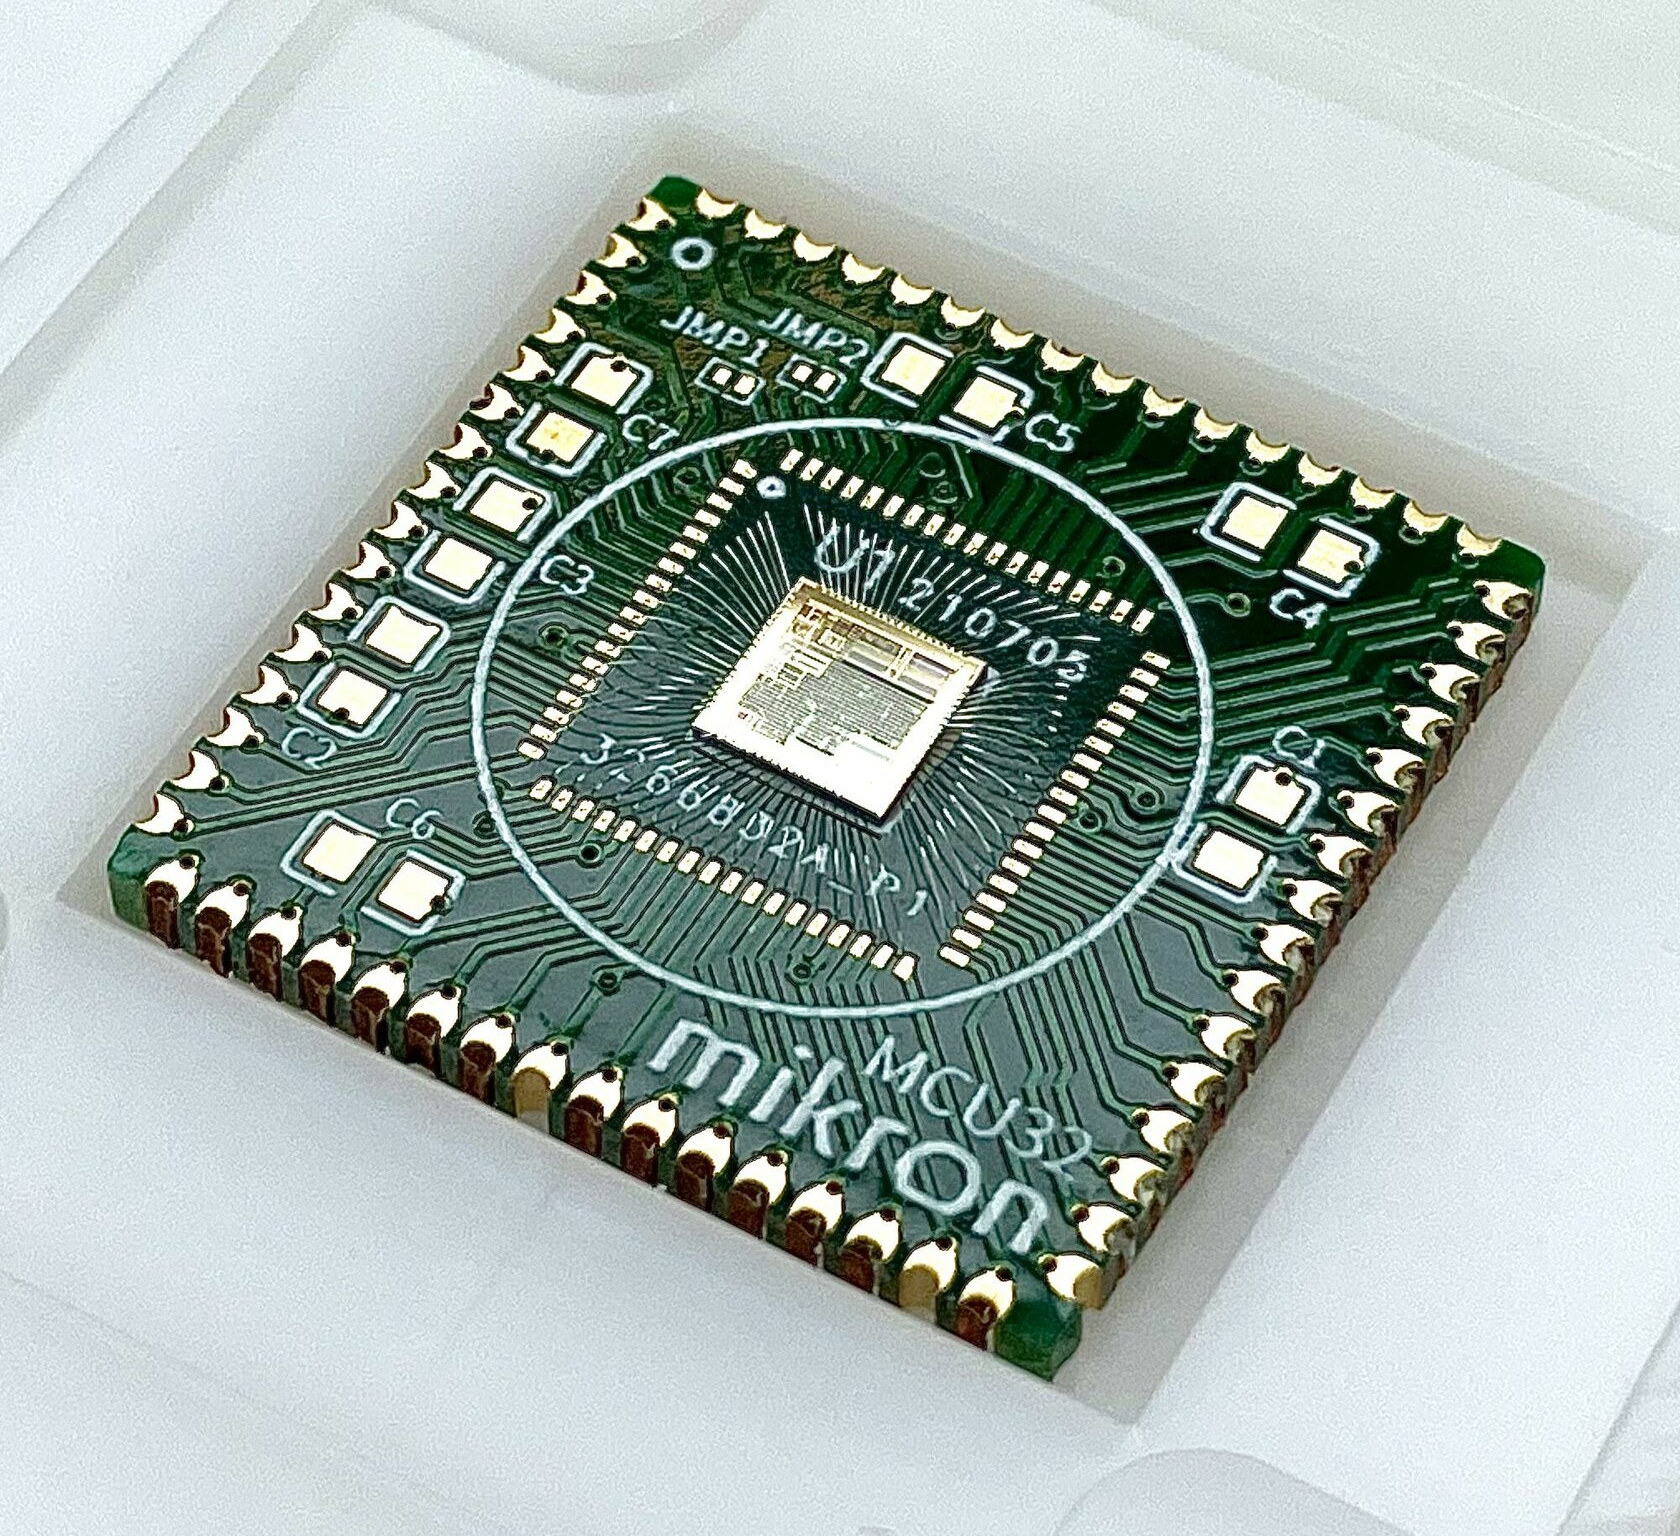 Mik32 купить. Mcu32 микрон. "Микроконтроллер mik32". Мк32 Амур. RISC V микрон.